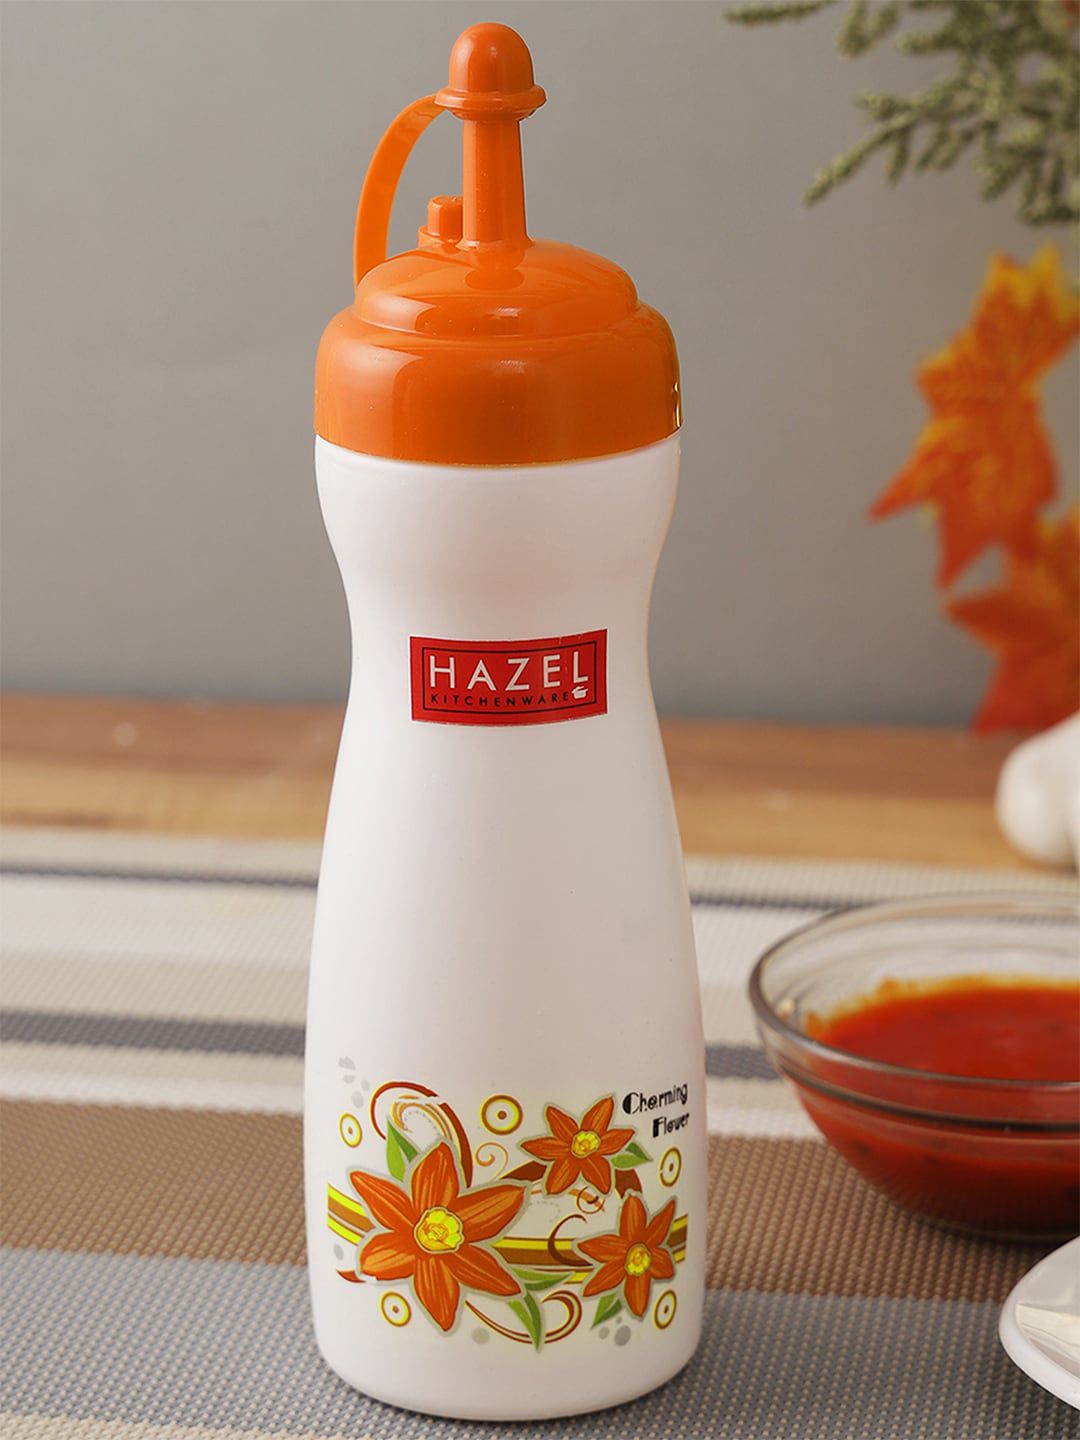 HAZEL Orange & White Printed Plastic Sauce Bottle With Cap Price in India